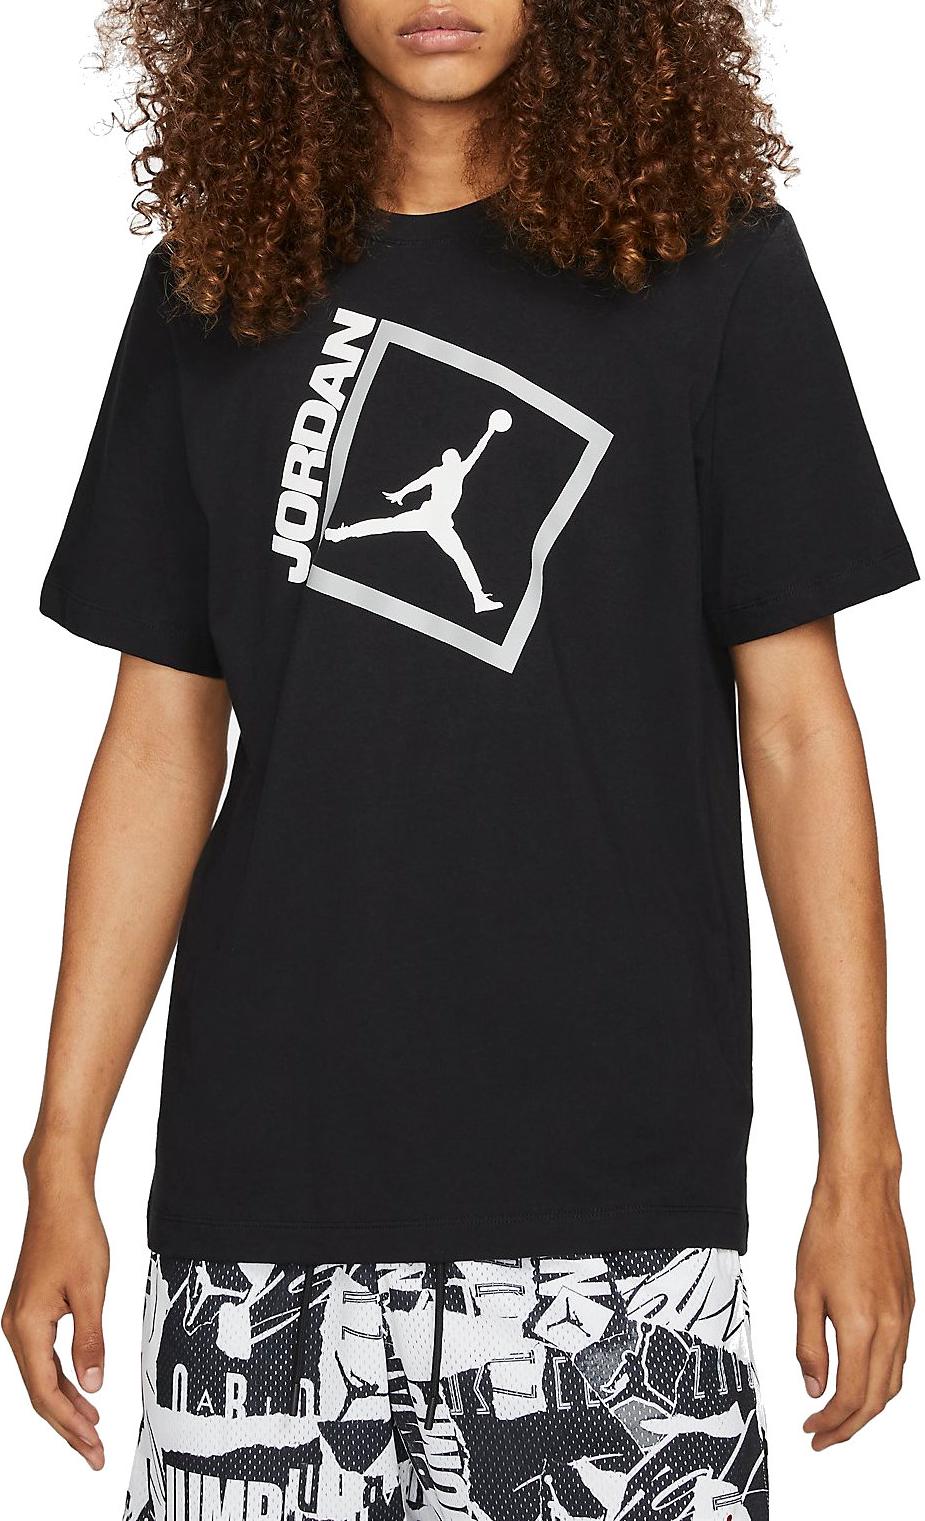 Tricou Jordan Jumpman Box Men s Short-Sleeve T-Shirt